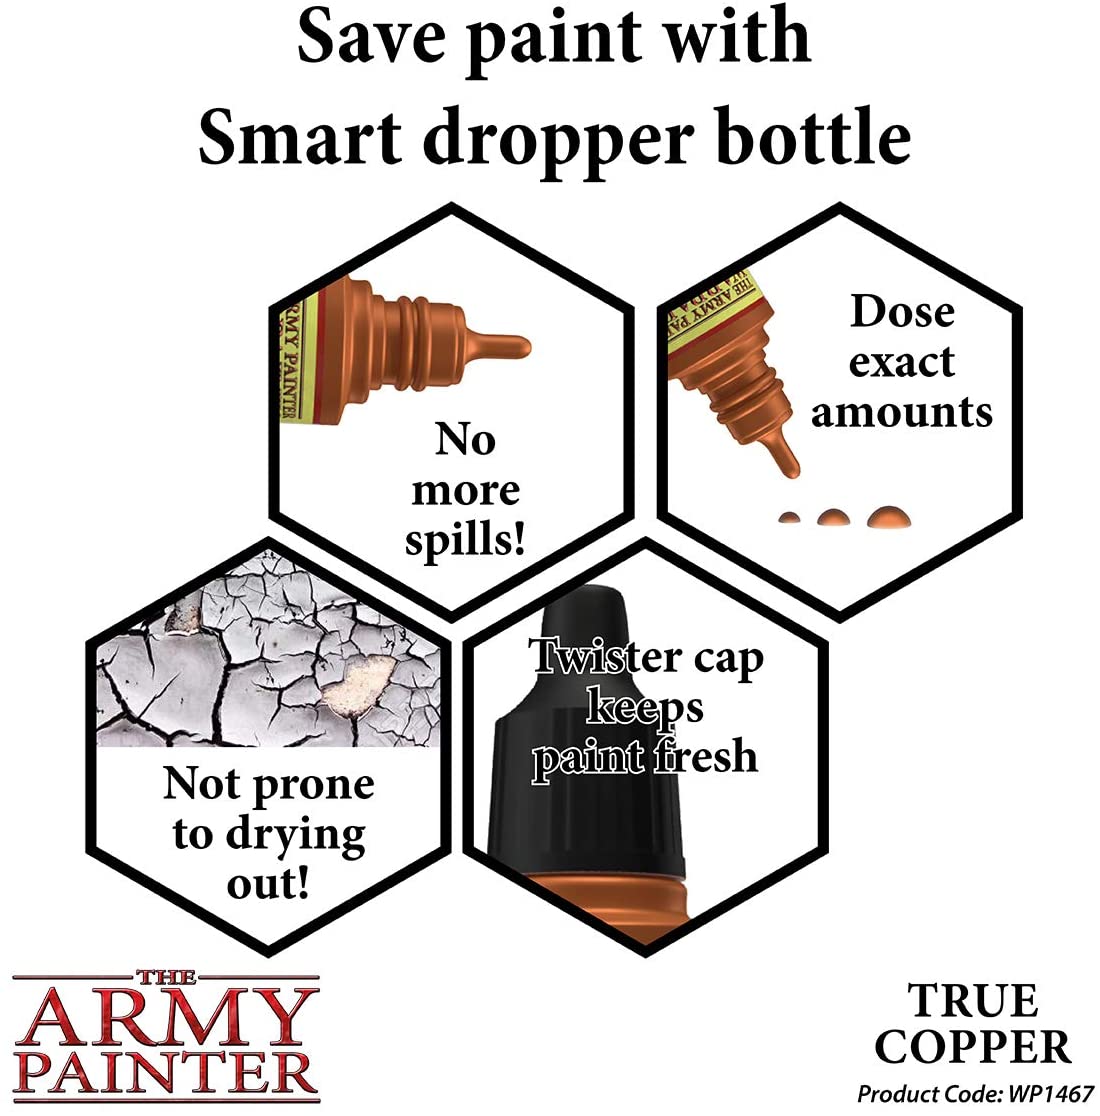 The Army Painter - Warpaints Metallics: True Copper (18ml/0.6oz)